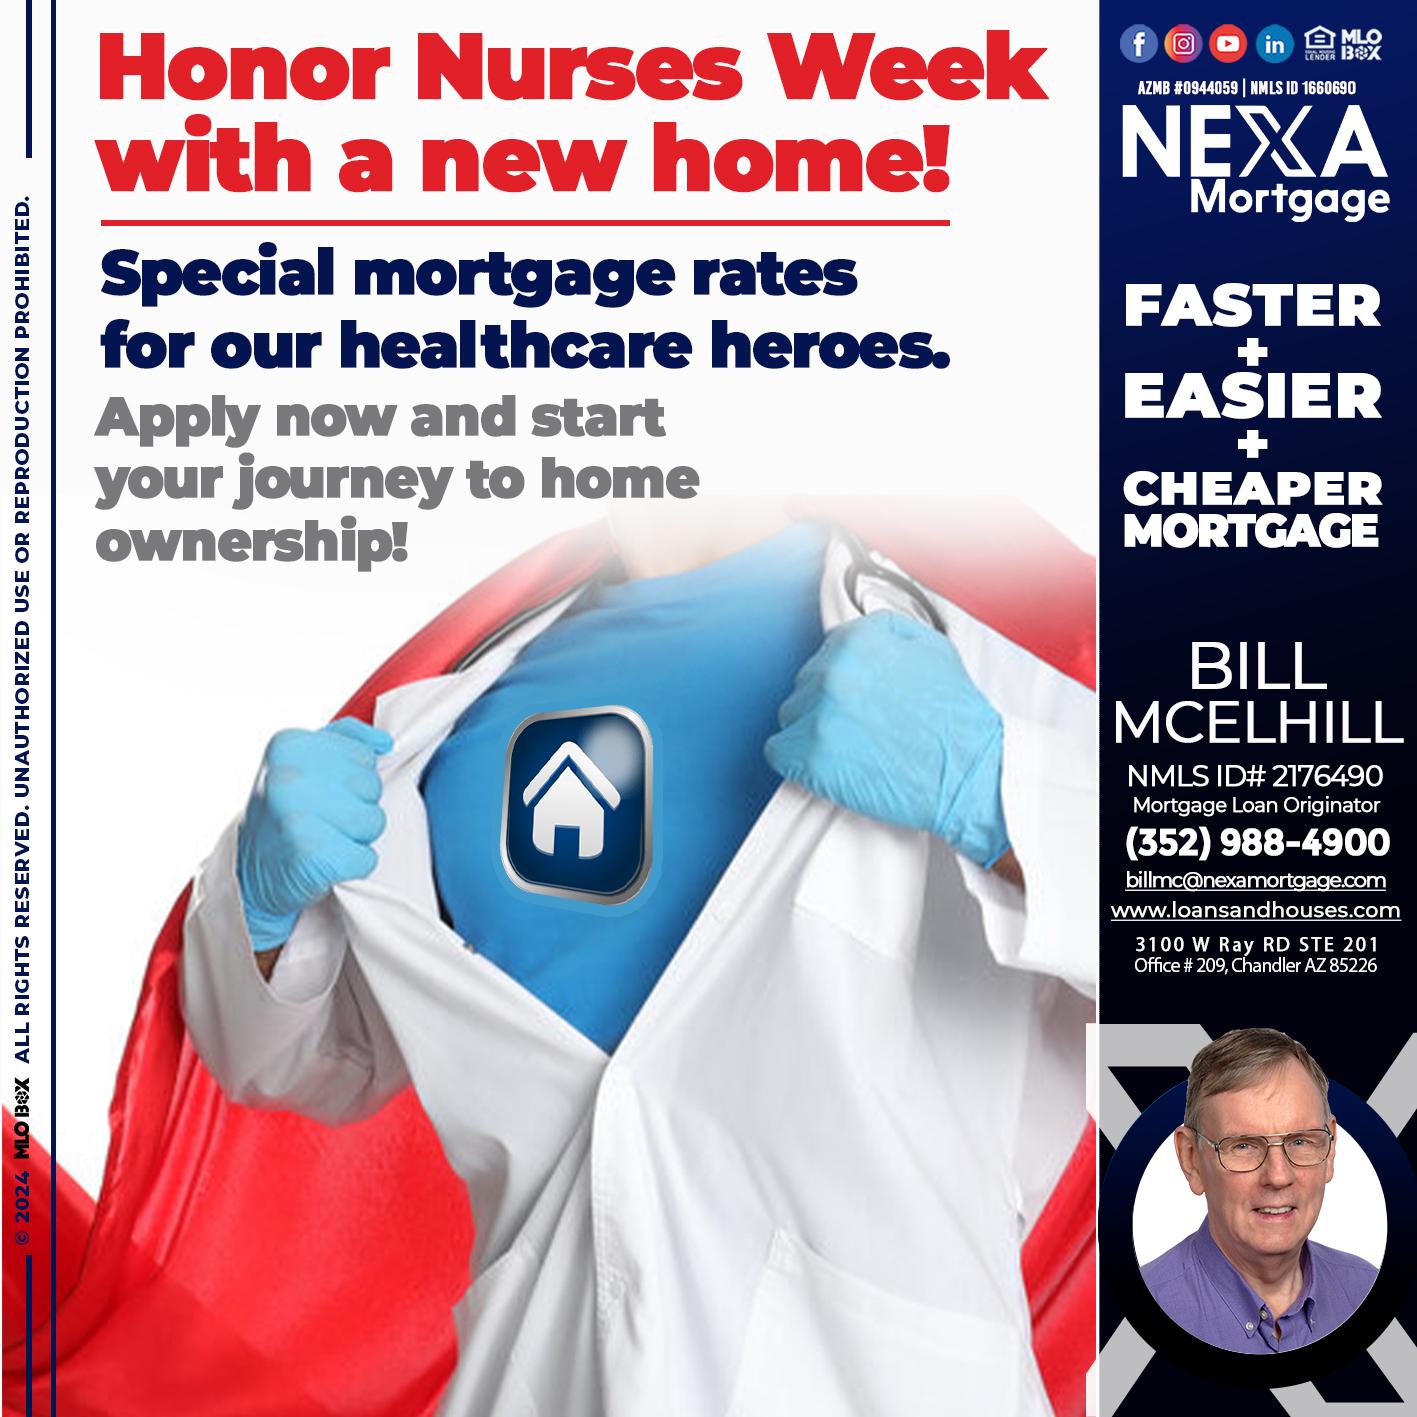 honor nurses - William McElhill -Mortgage Loan Originator